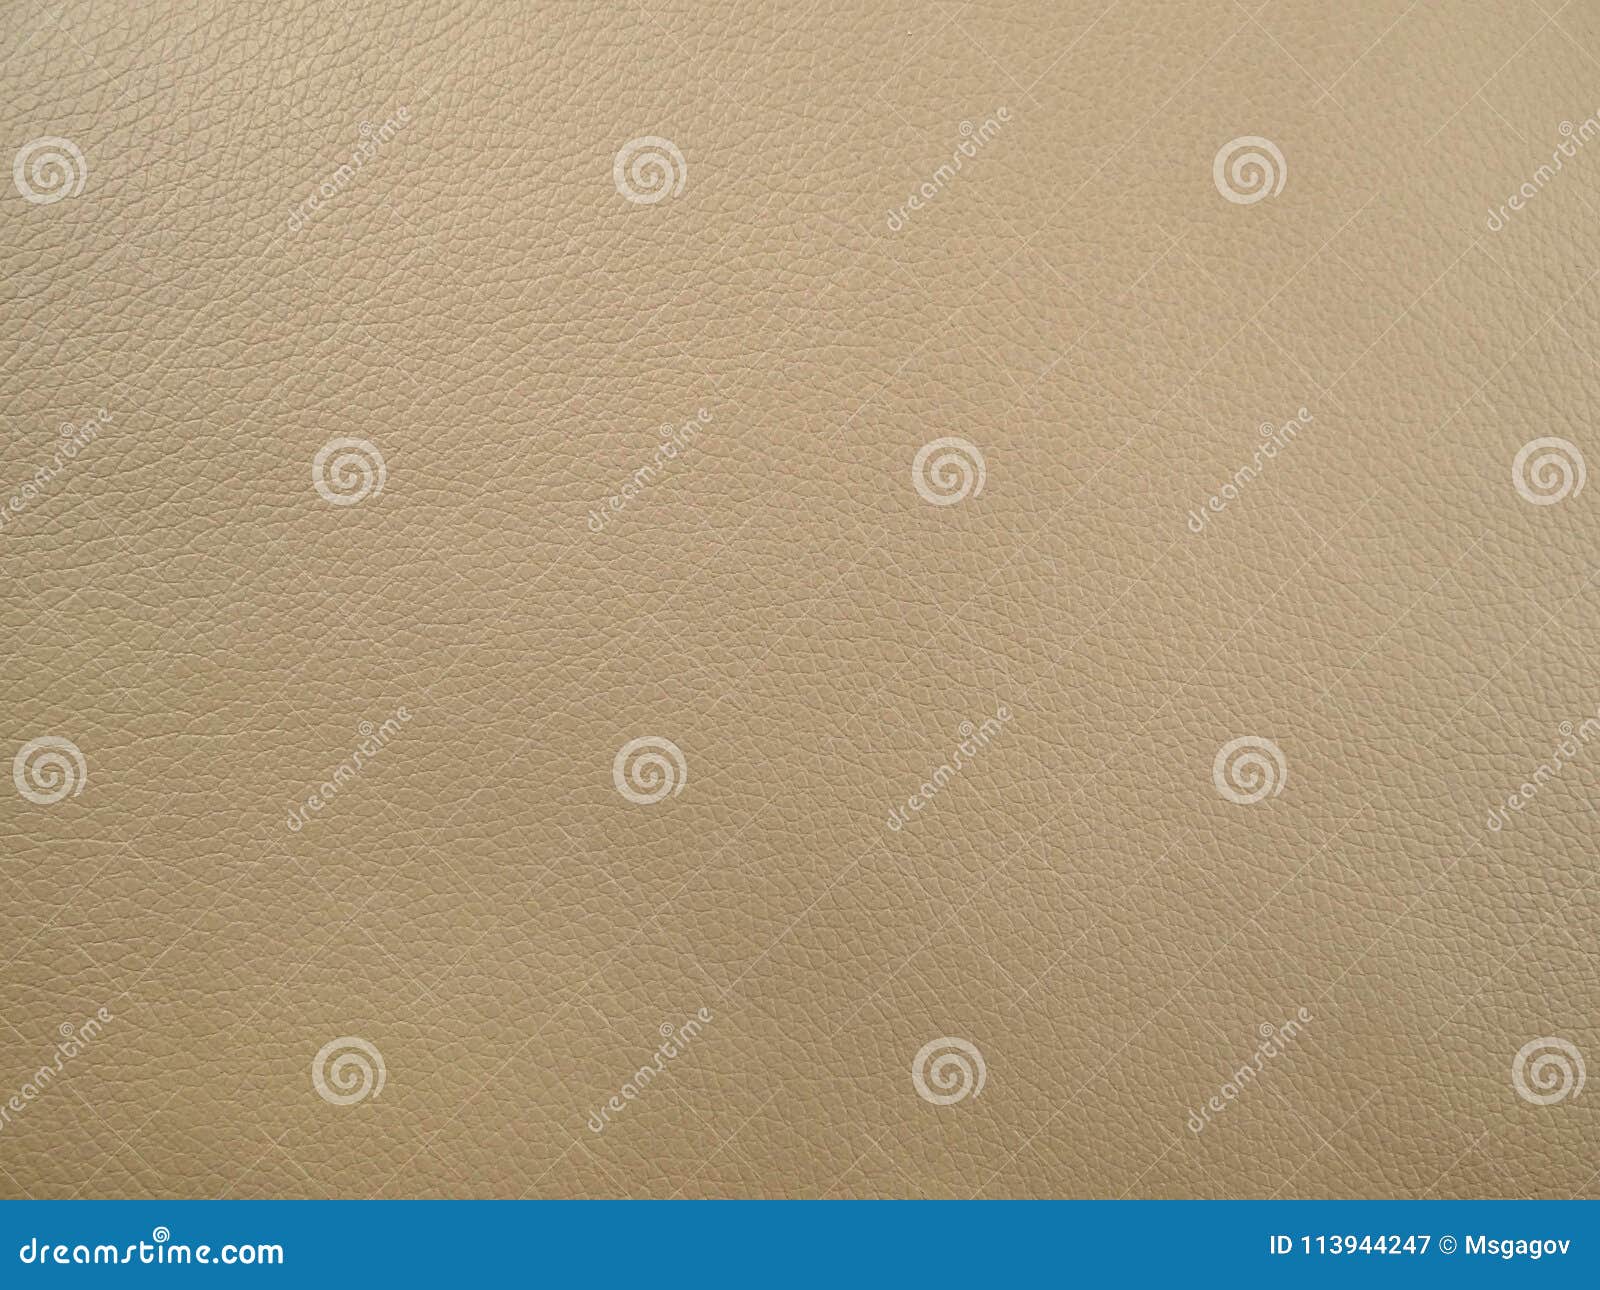 Luxury Beige Leather Texture Background Stock Image - Image of light ...